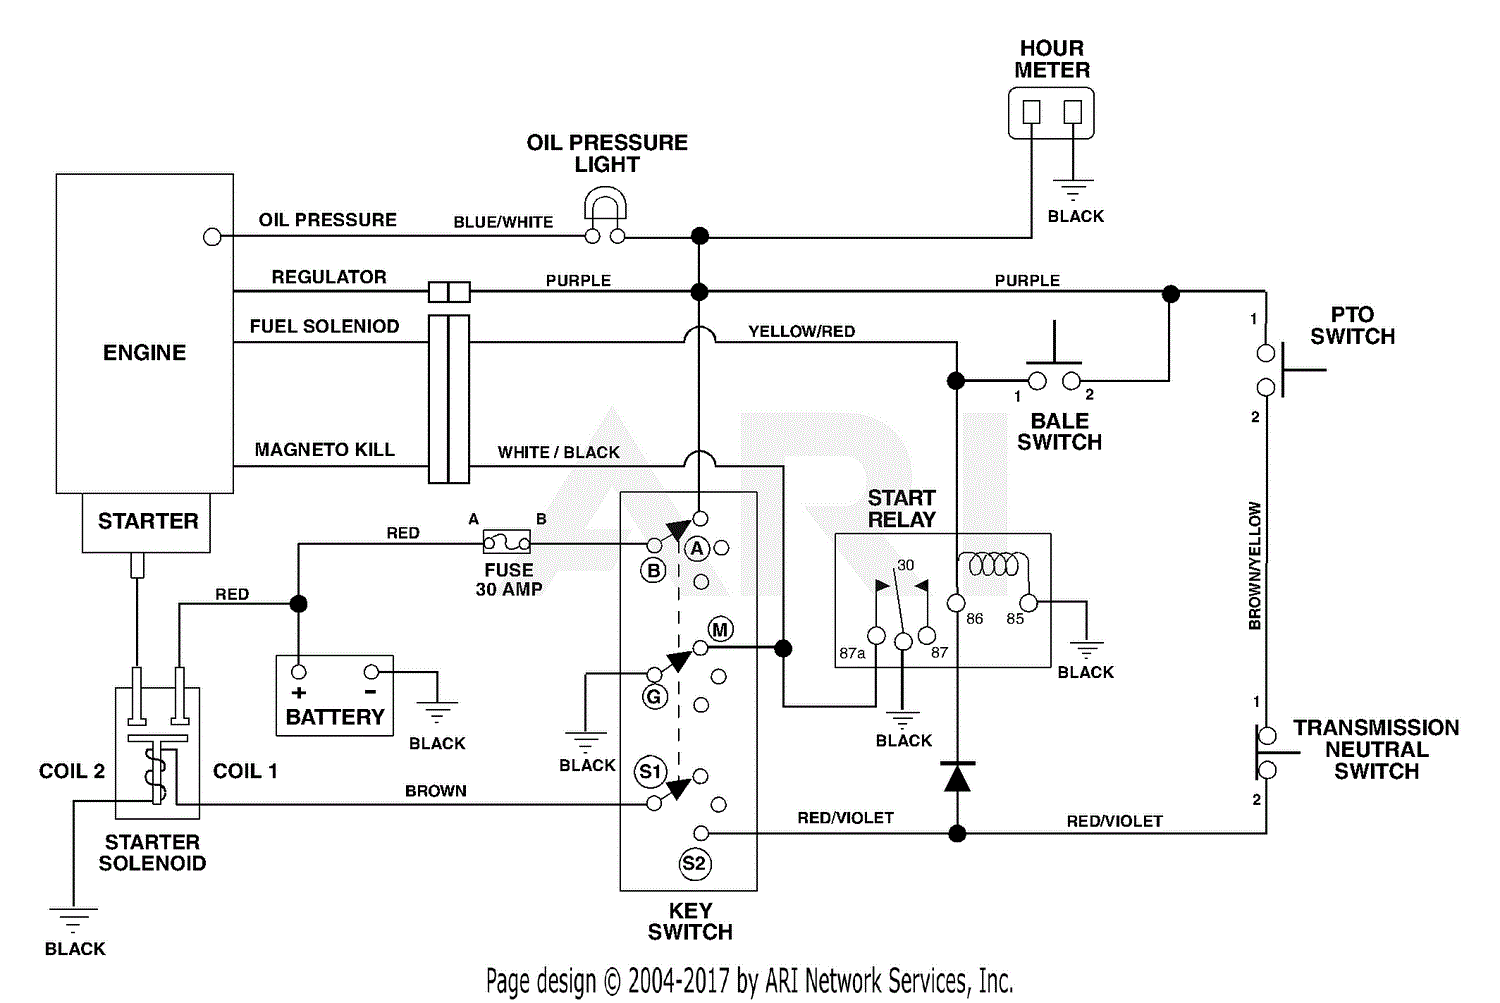 where can i find a detailed wiring diagram for kawasaki barako 175